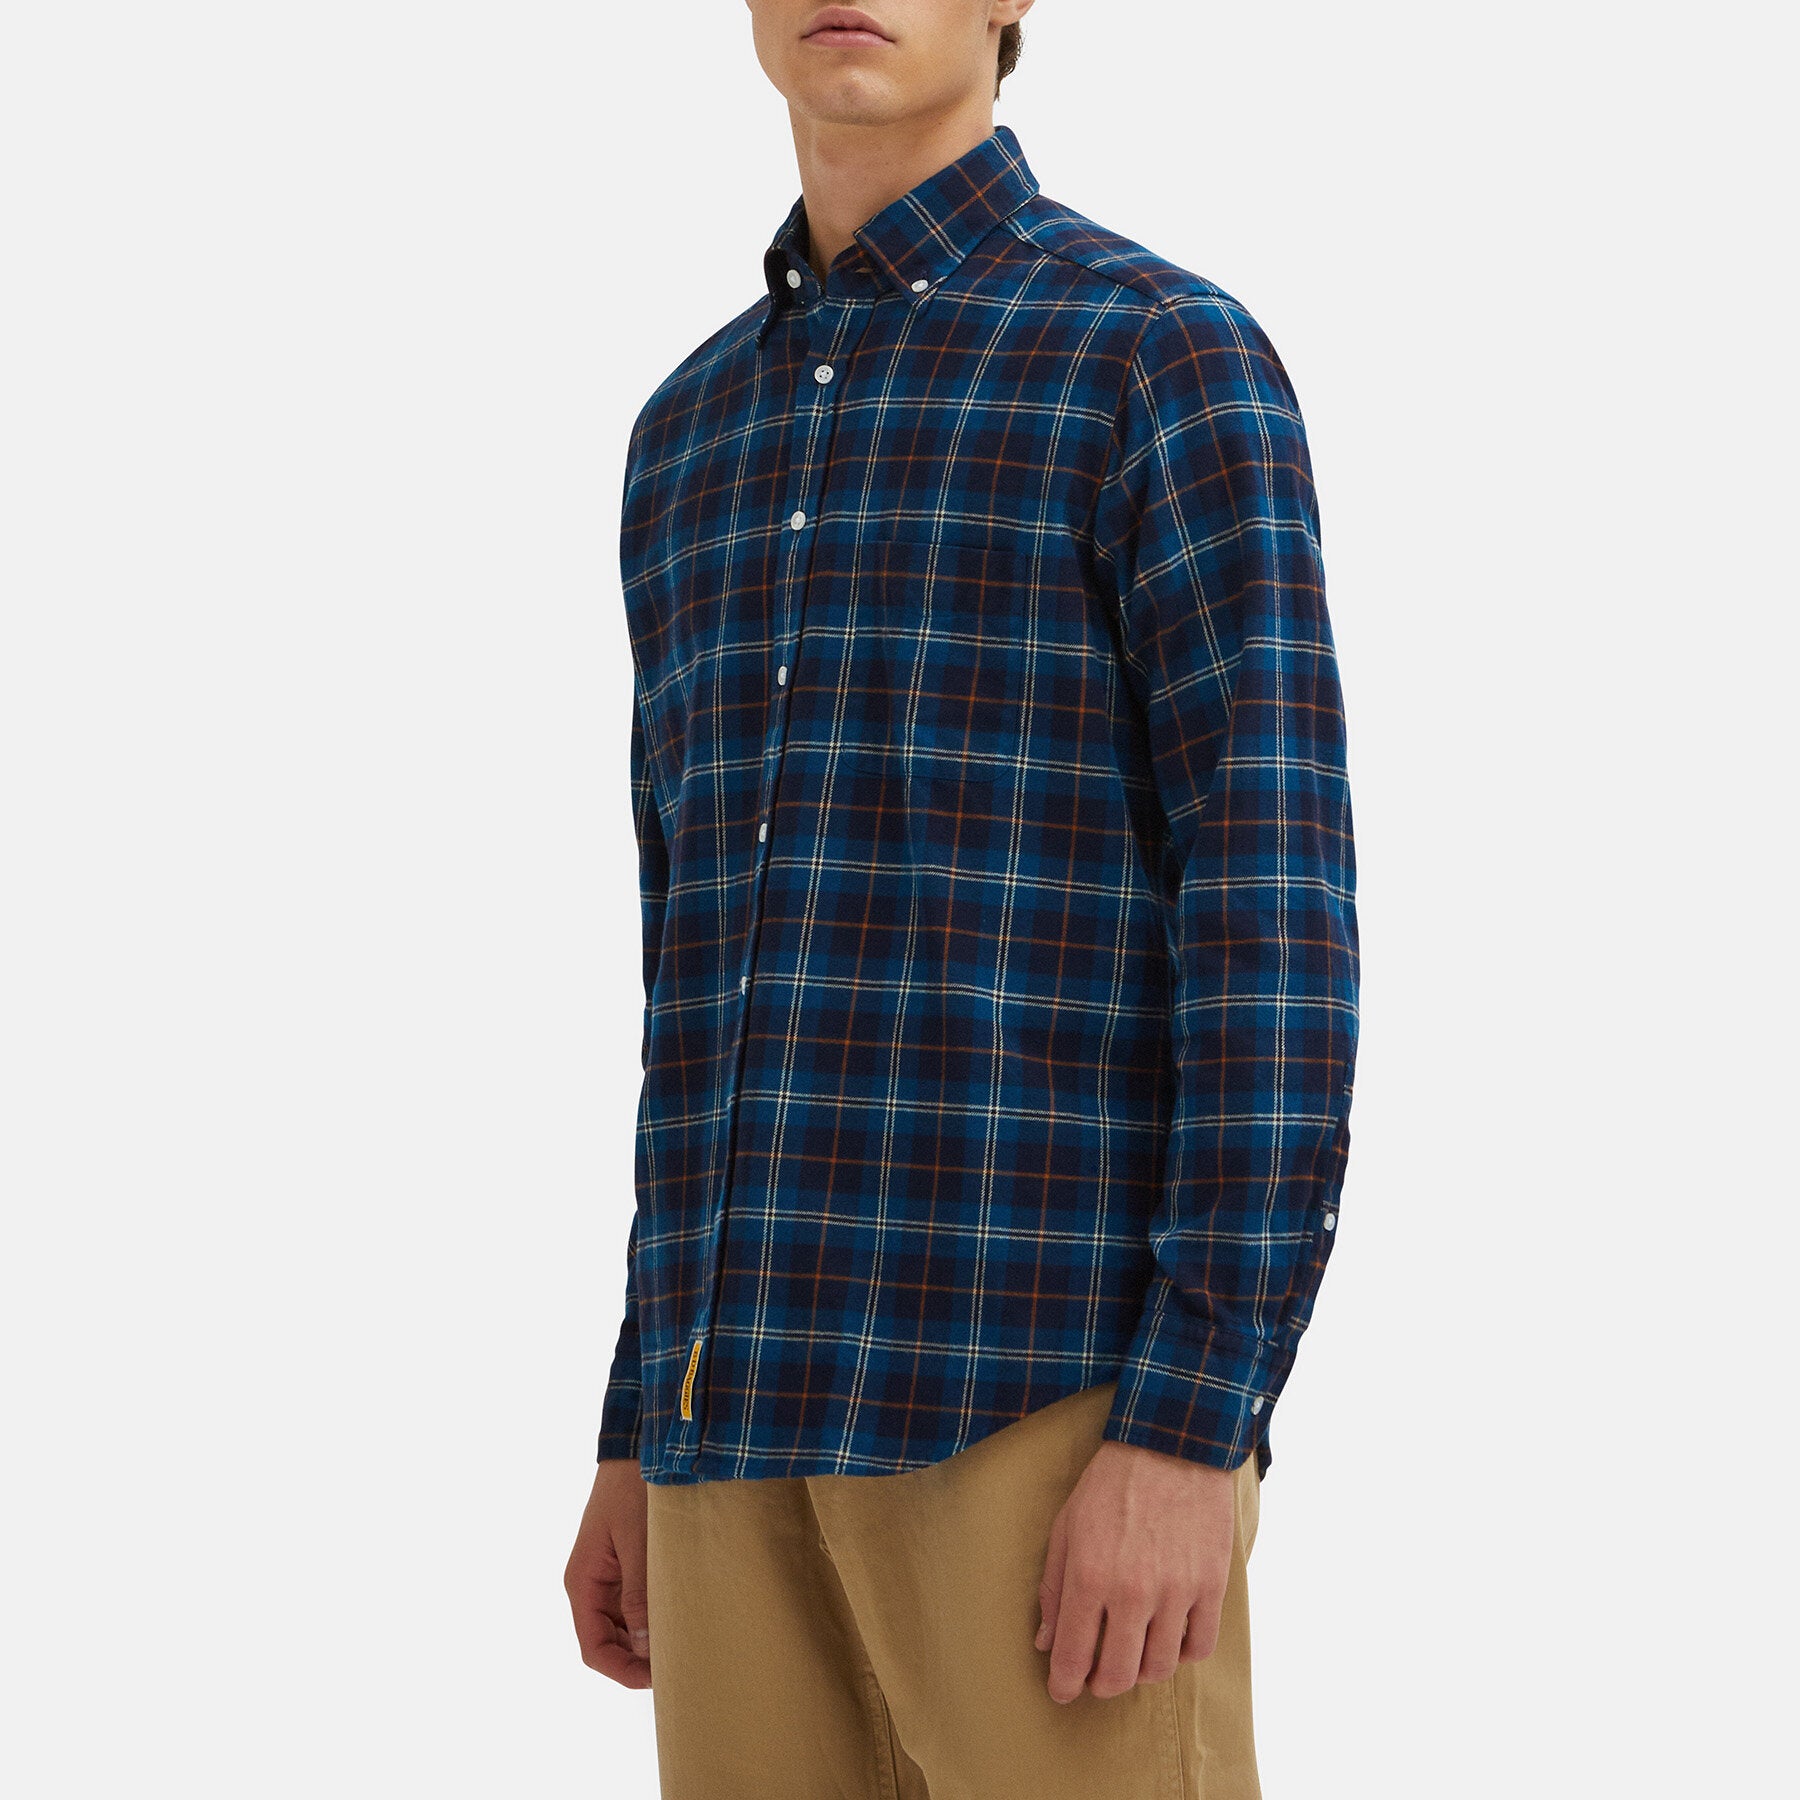 Bradford flannel check shirt